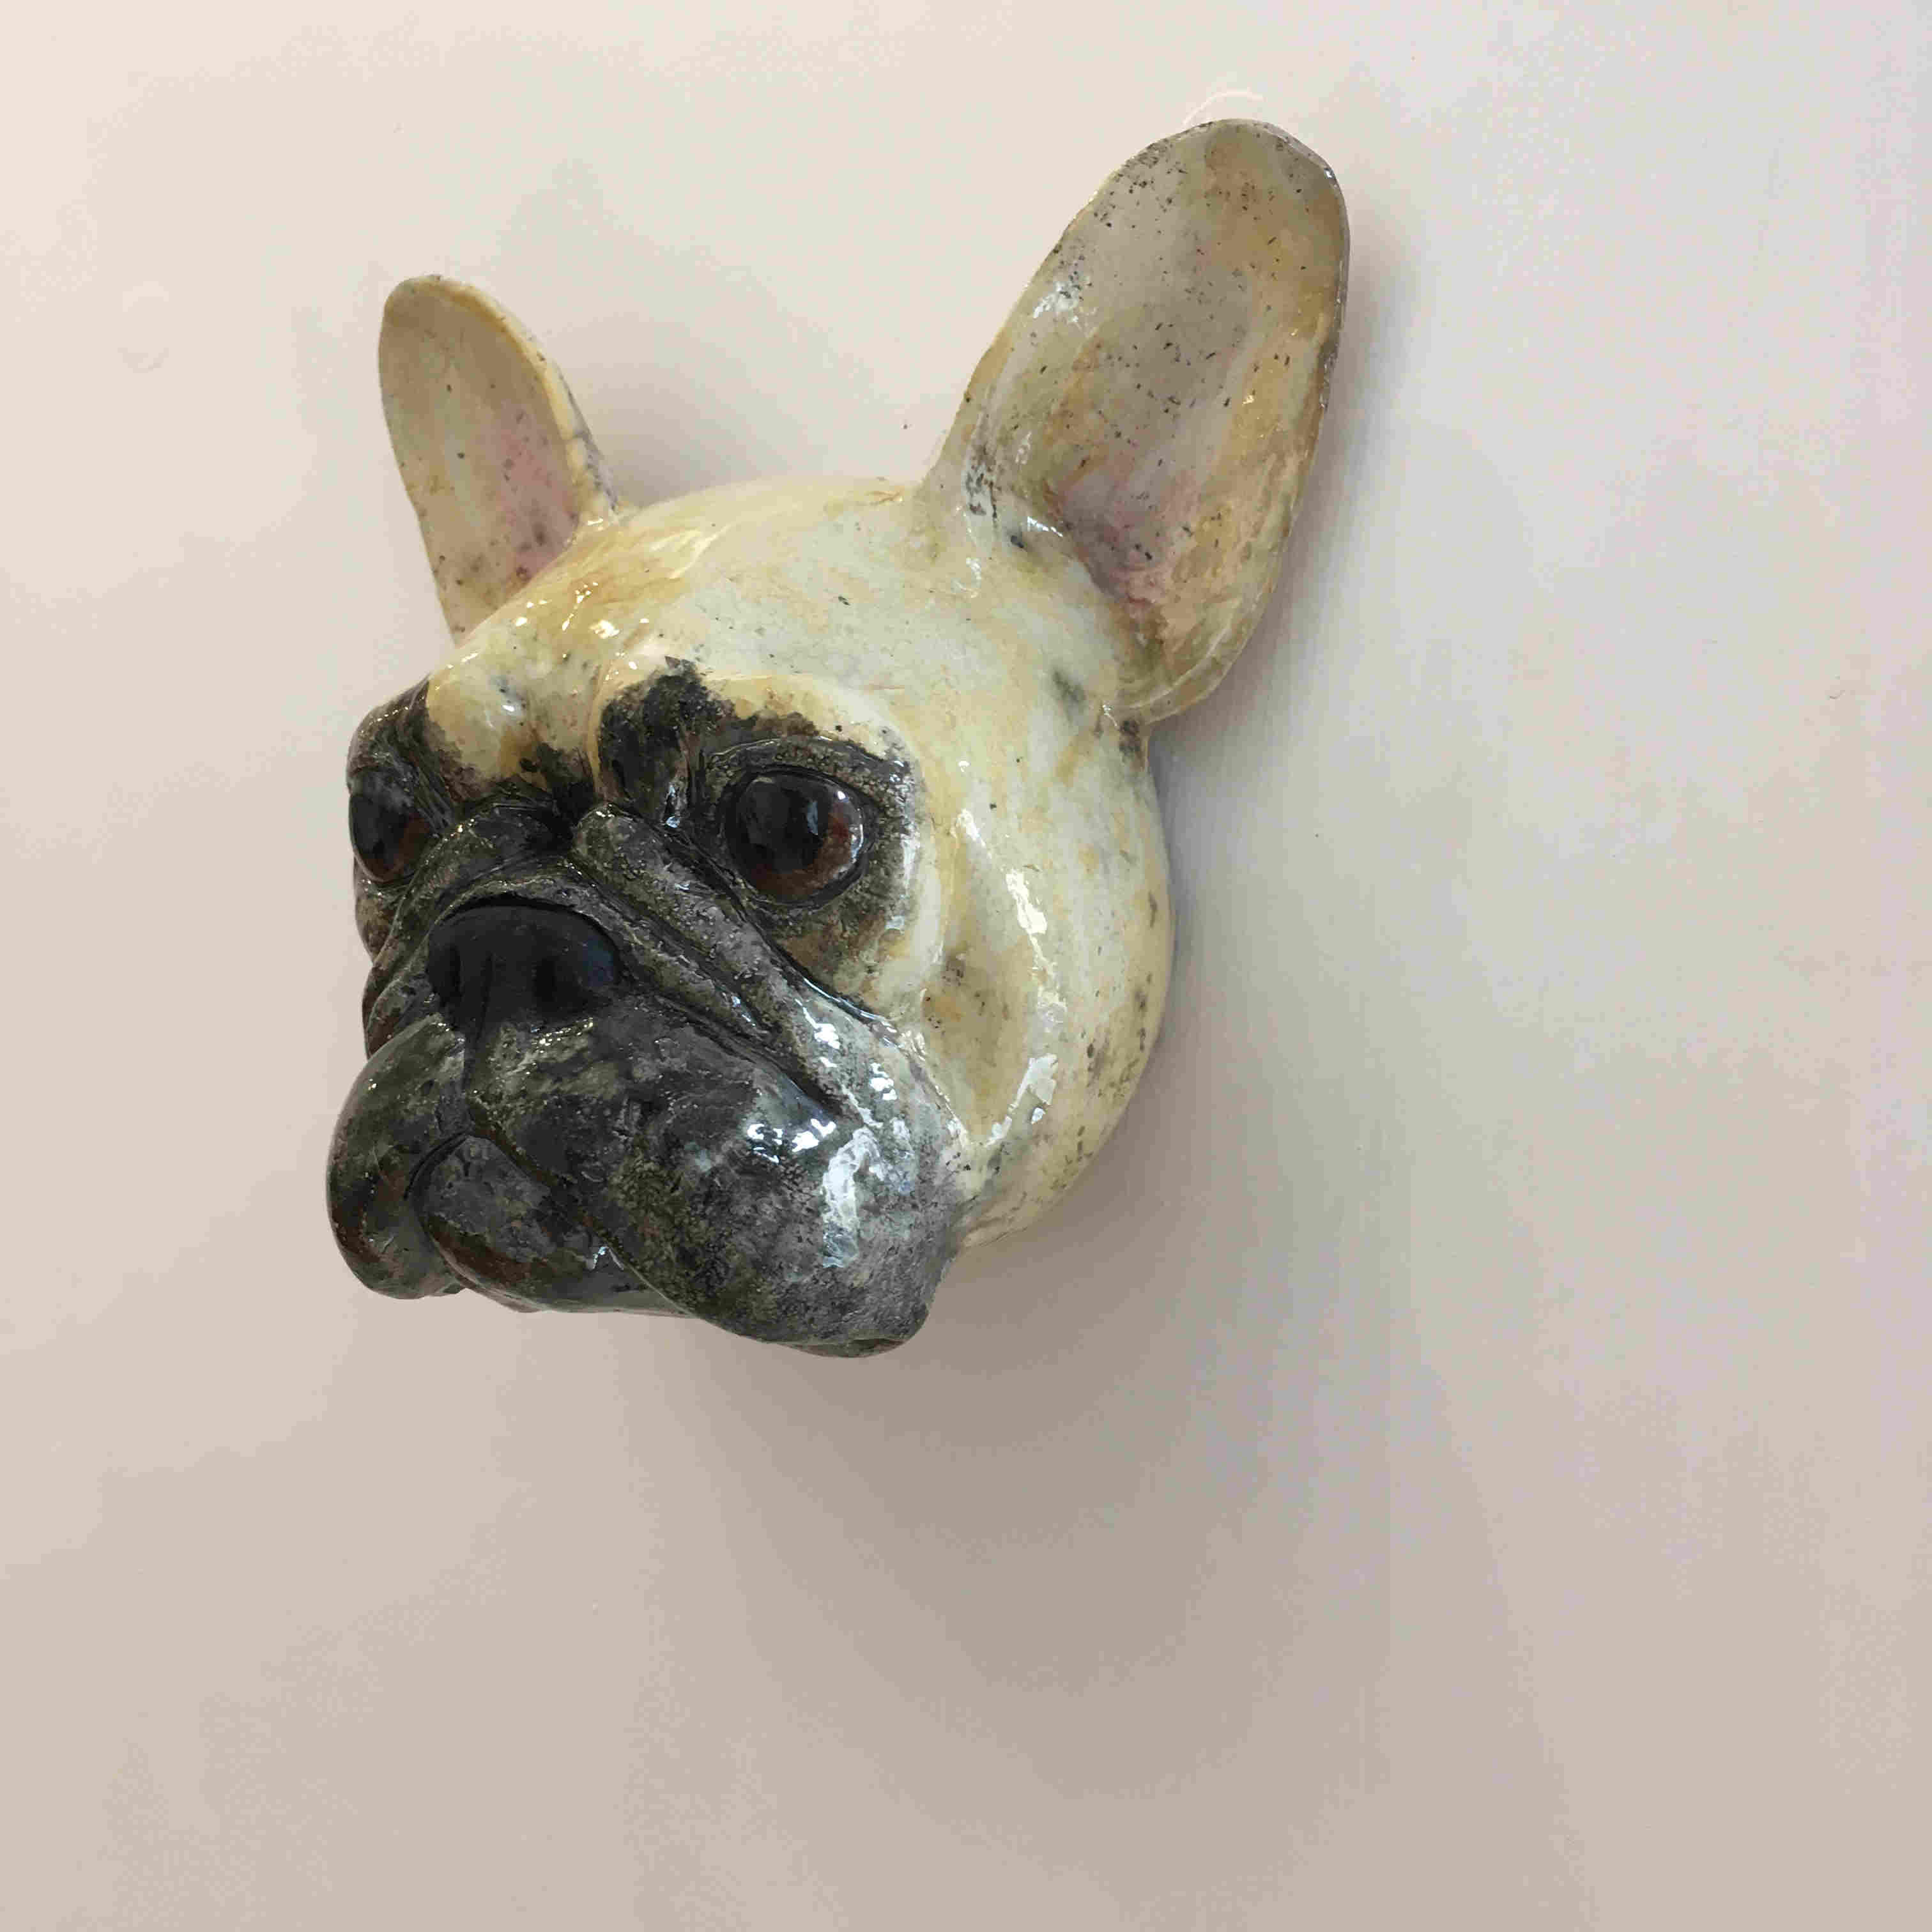 'French Bulldog "Hodge"' by artist Alex Johannsen